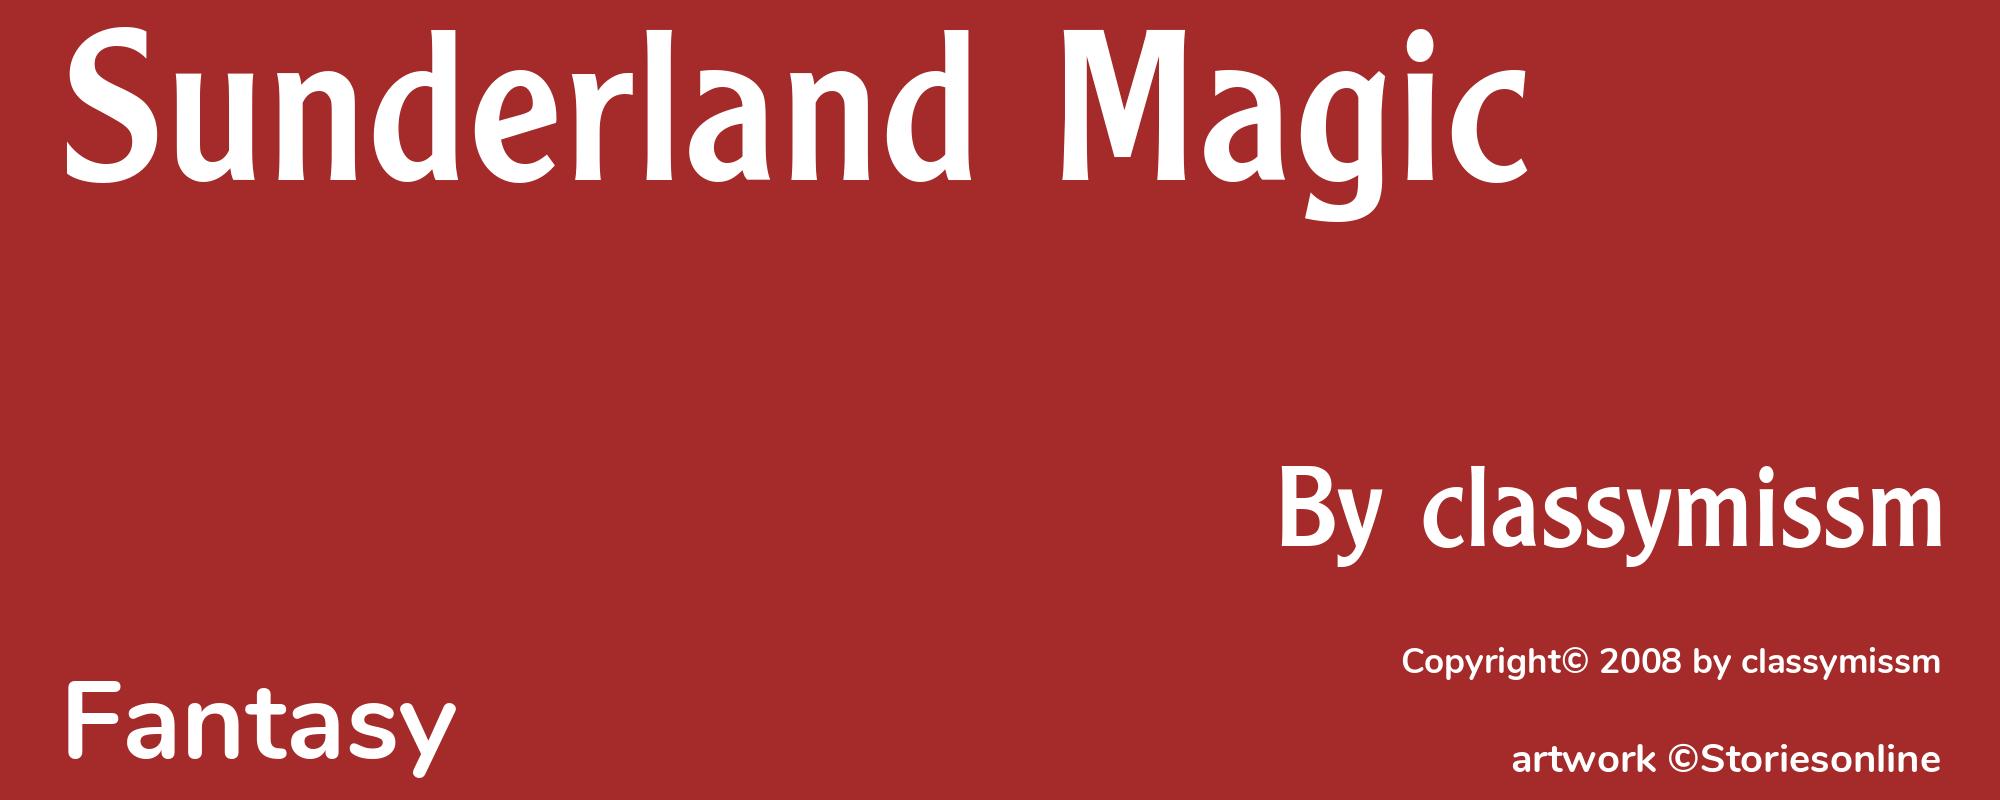 Sunderland Magic - Cover